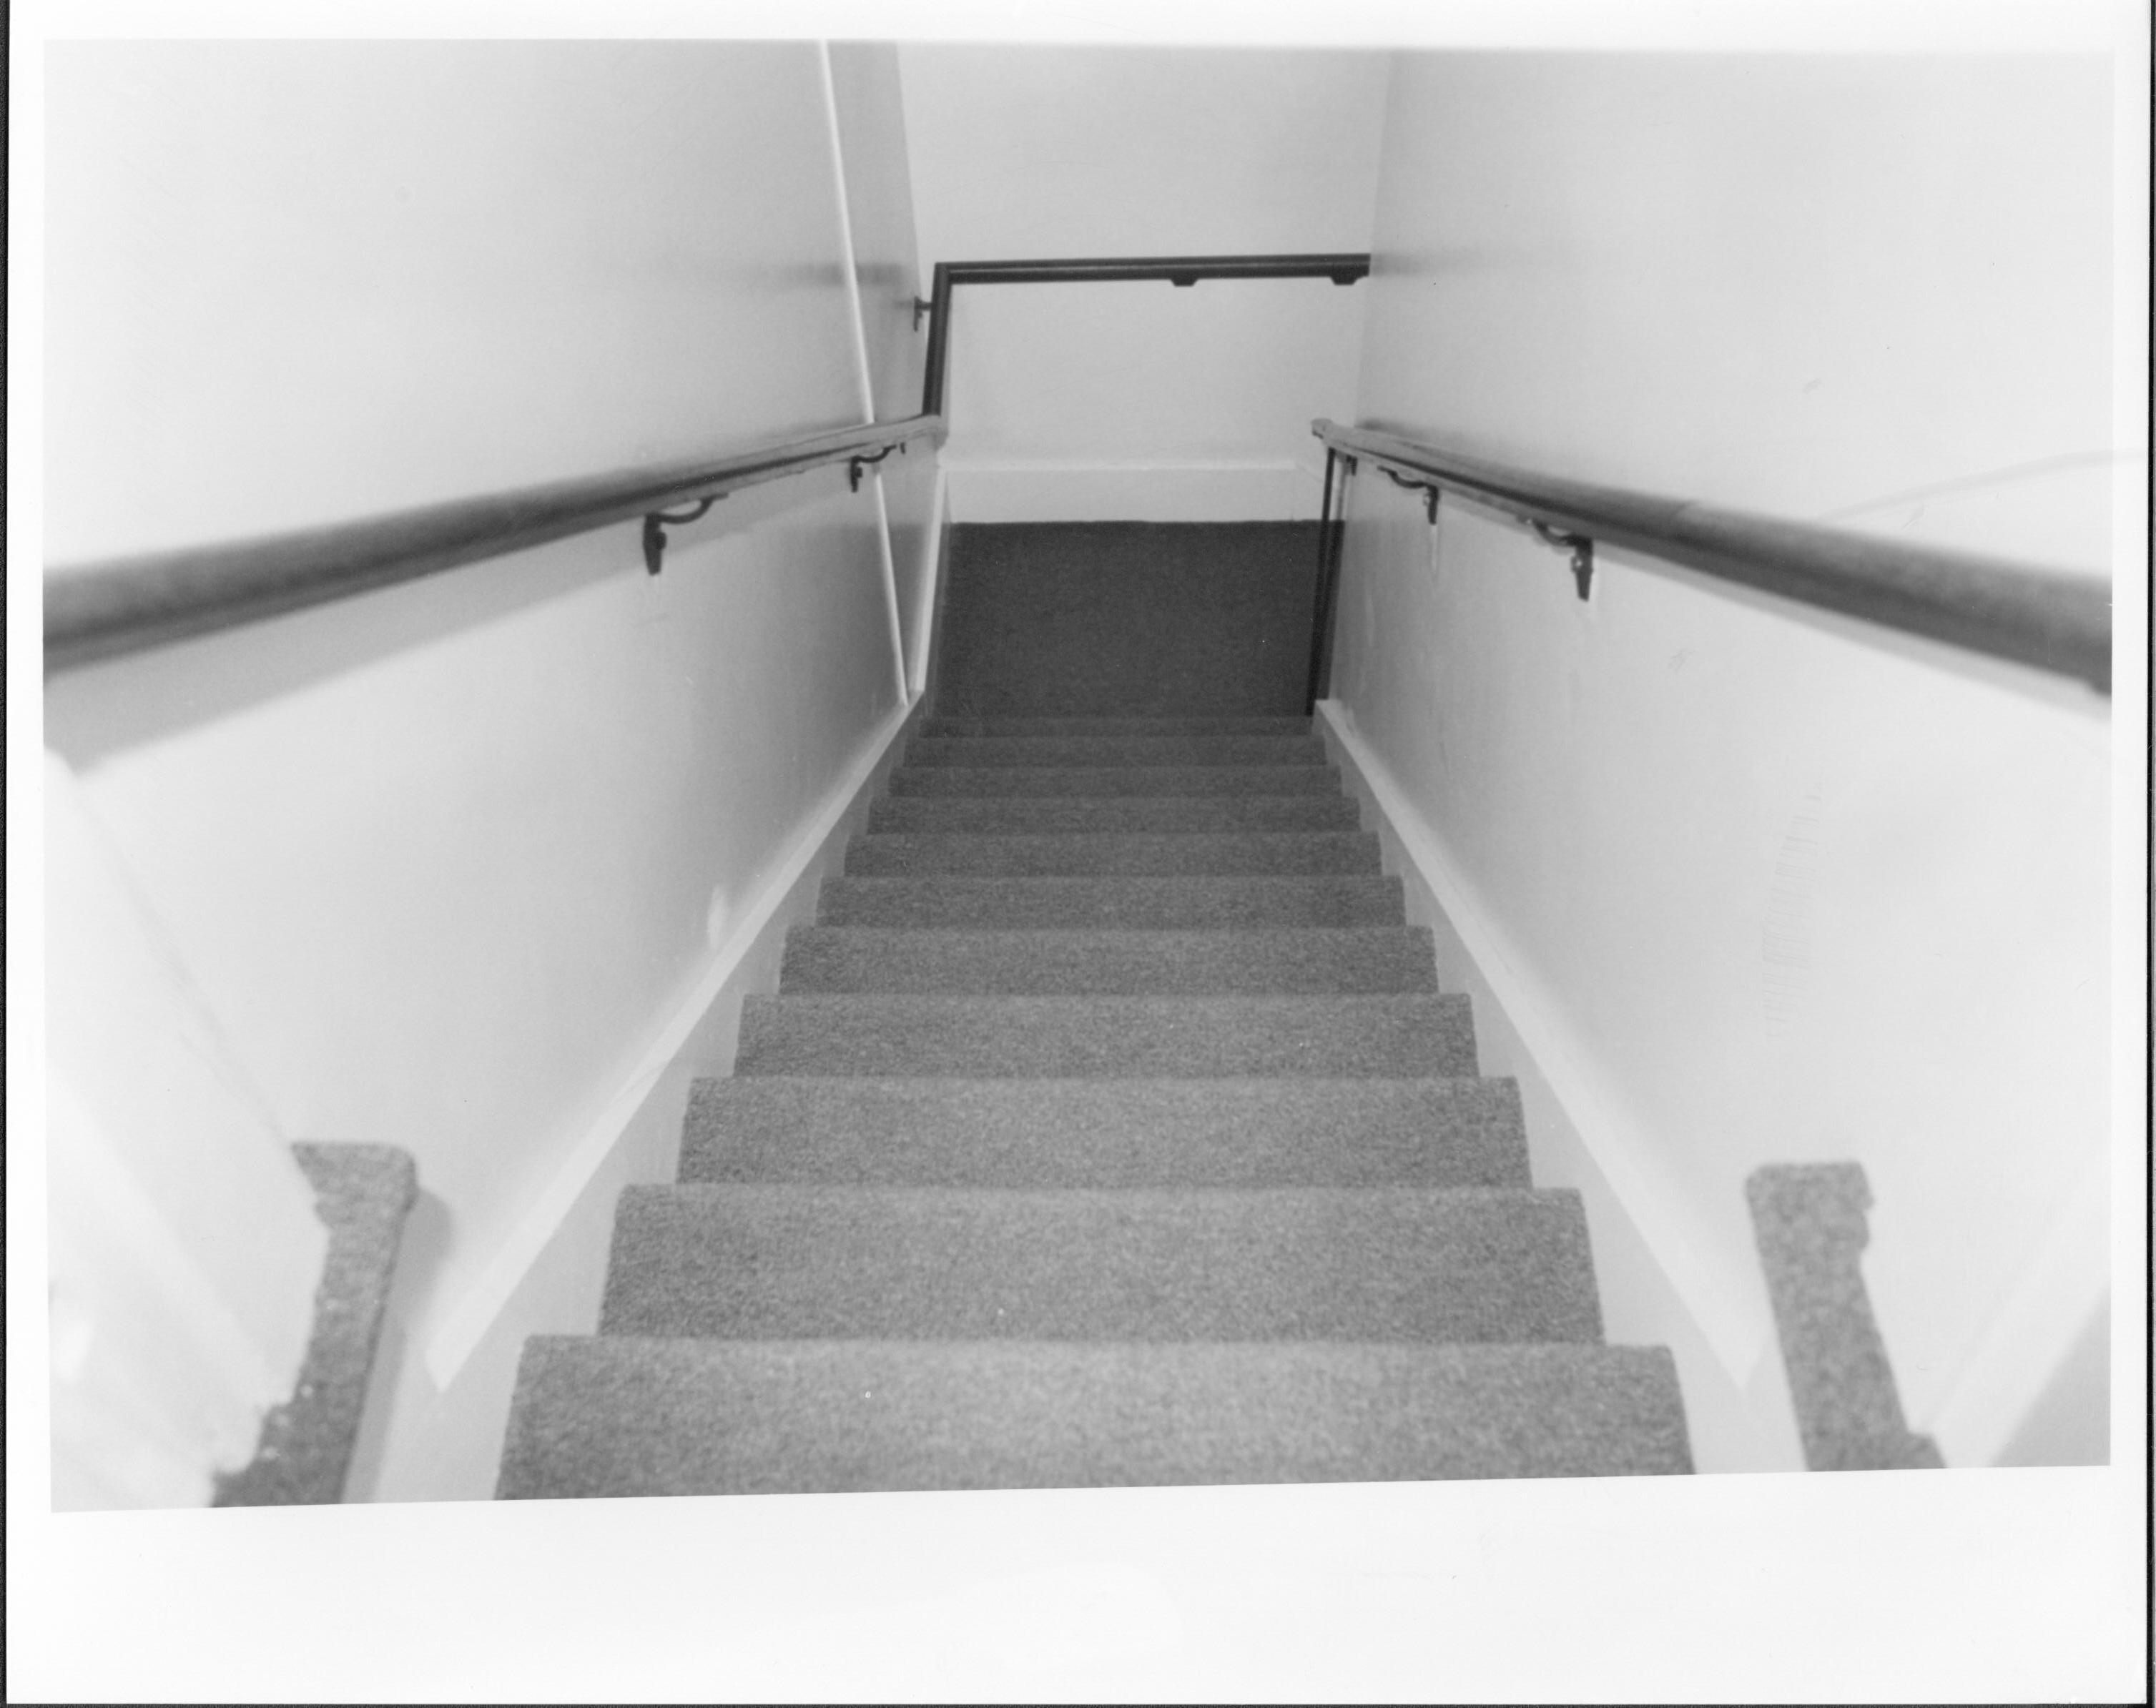 NA Lincoln, Home, back staircase, railing